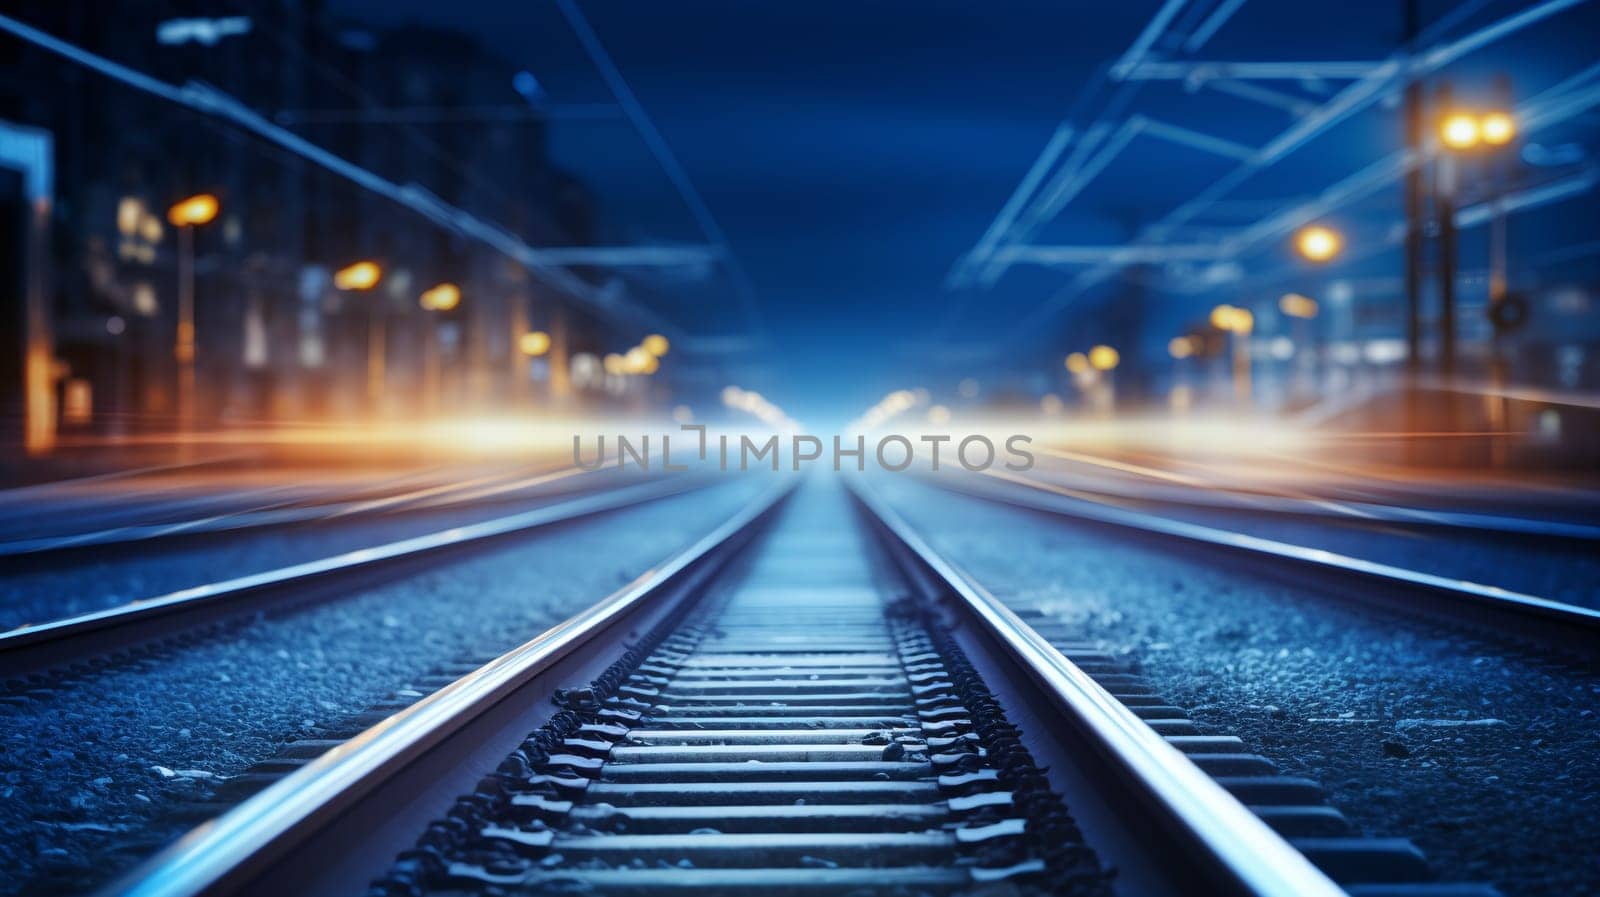 Twilight Glow on City Railroad Tracks by chrisroll